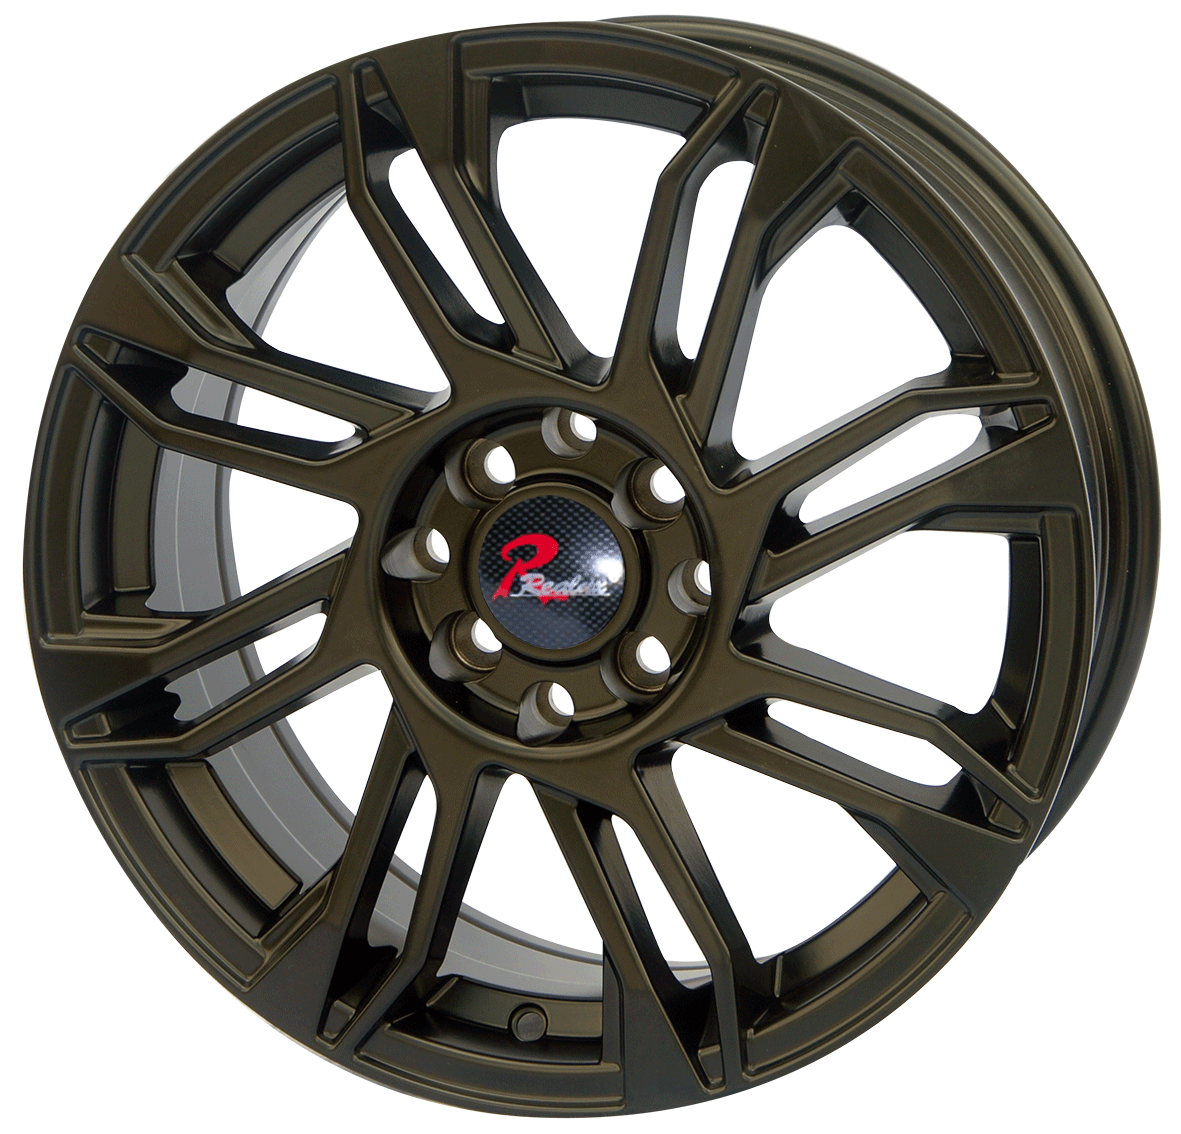 16×6.5 16×7 inch brown face wheel rim